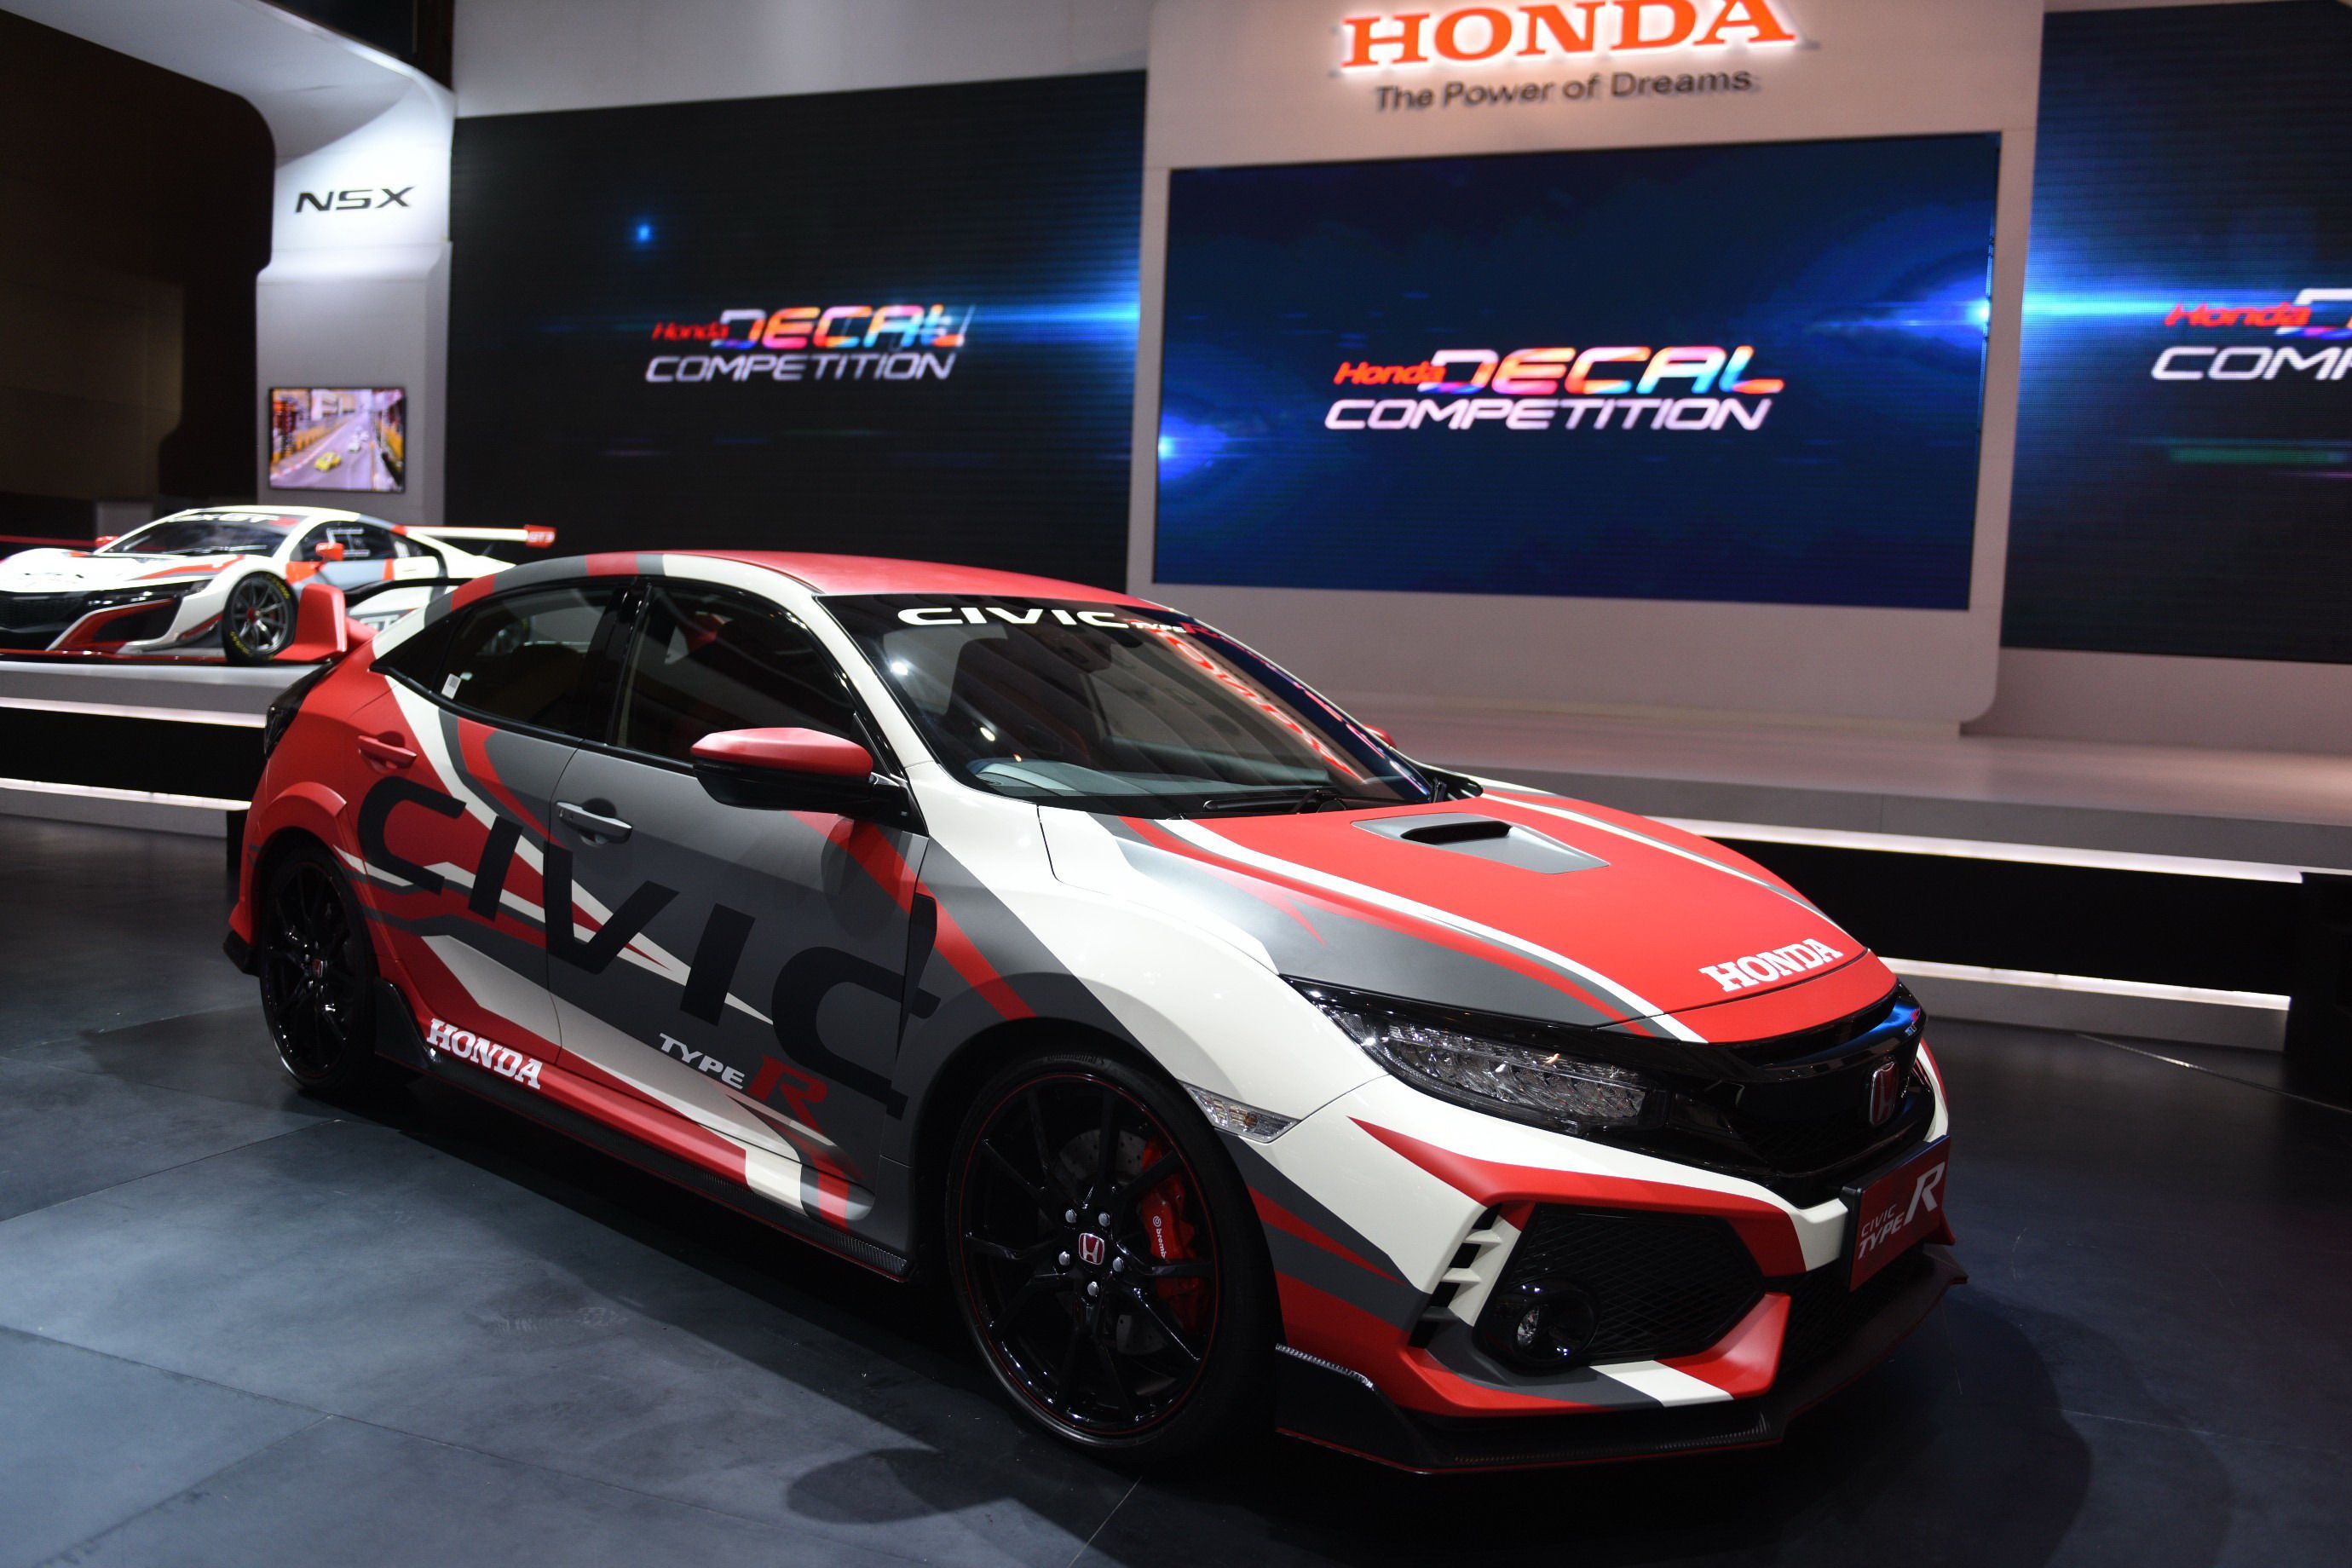 Honda Civic Type R Hasil Decal Competition Zona Priangan